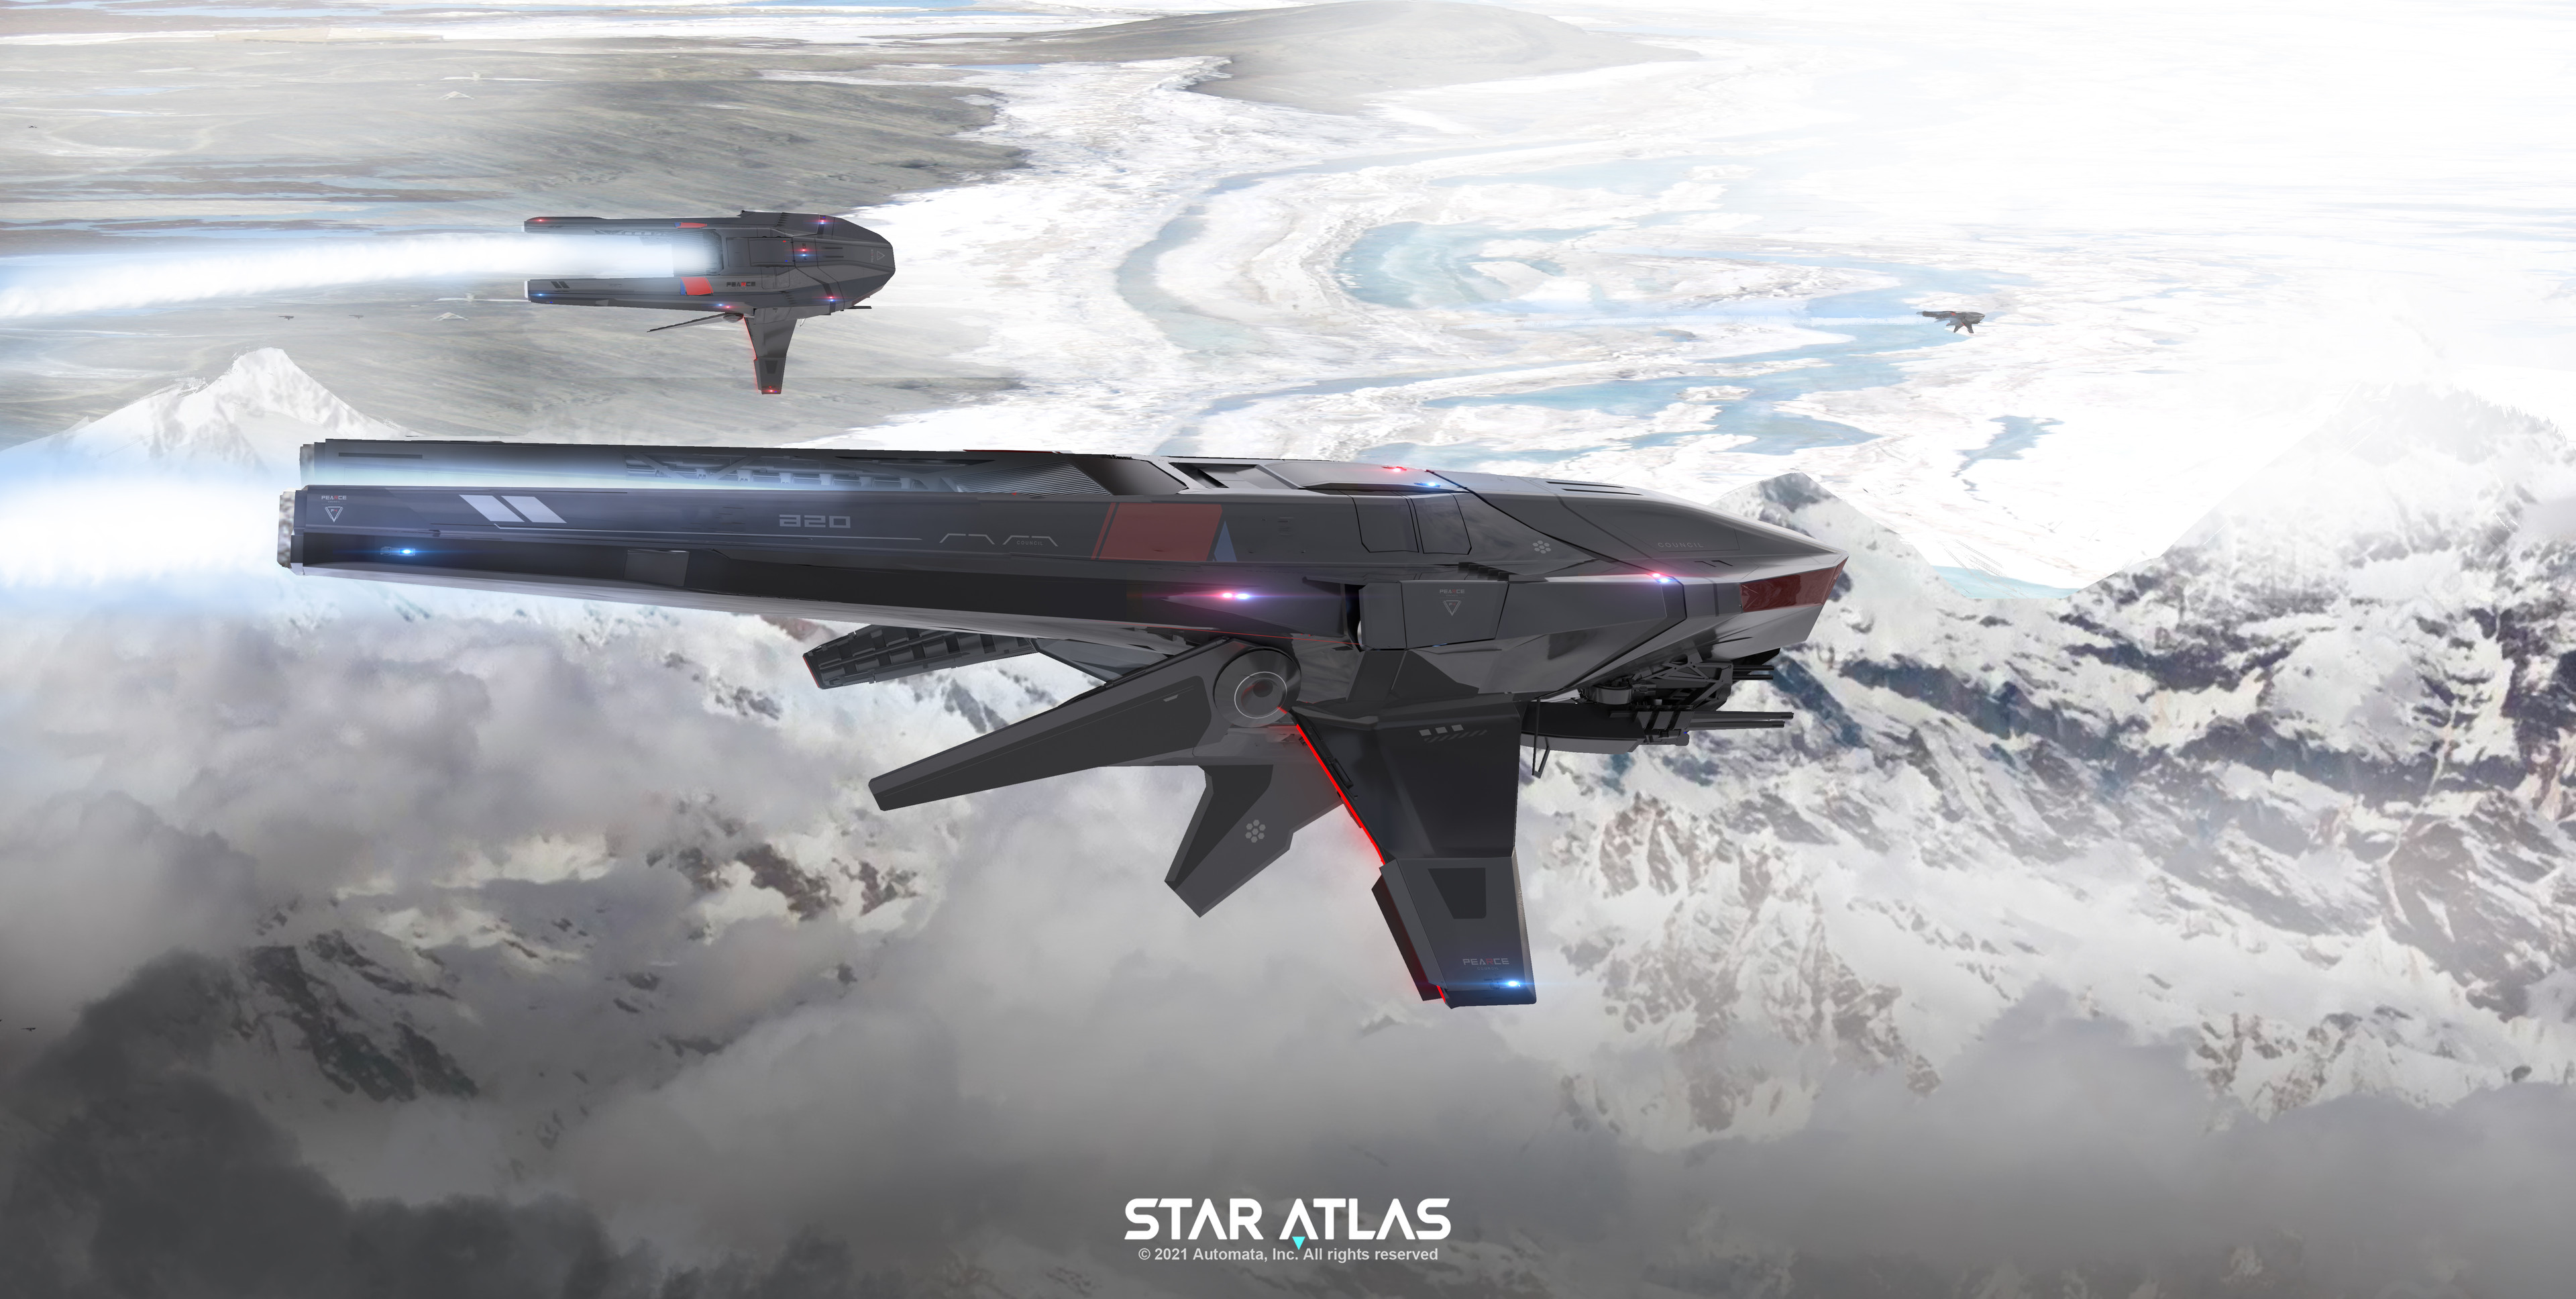 General 3840x1936 Star Atlas science fiction PC gaming vehicle spaceship 2021 (year)